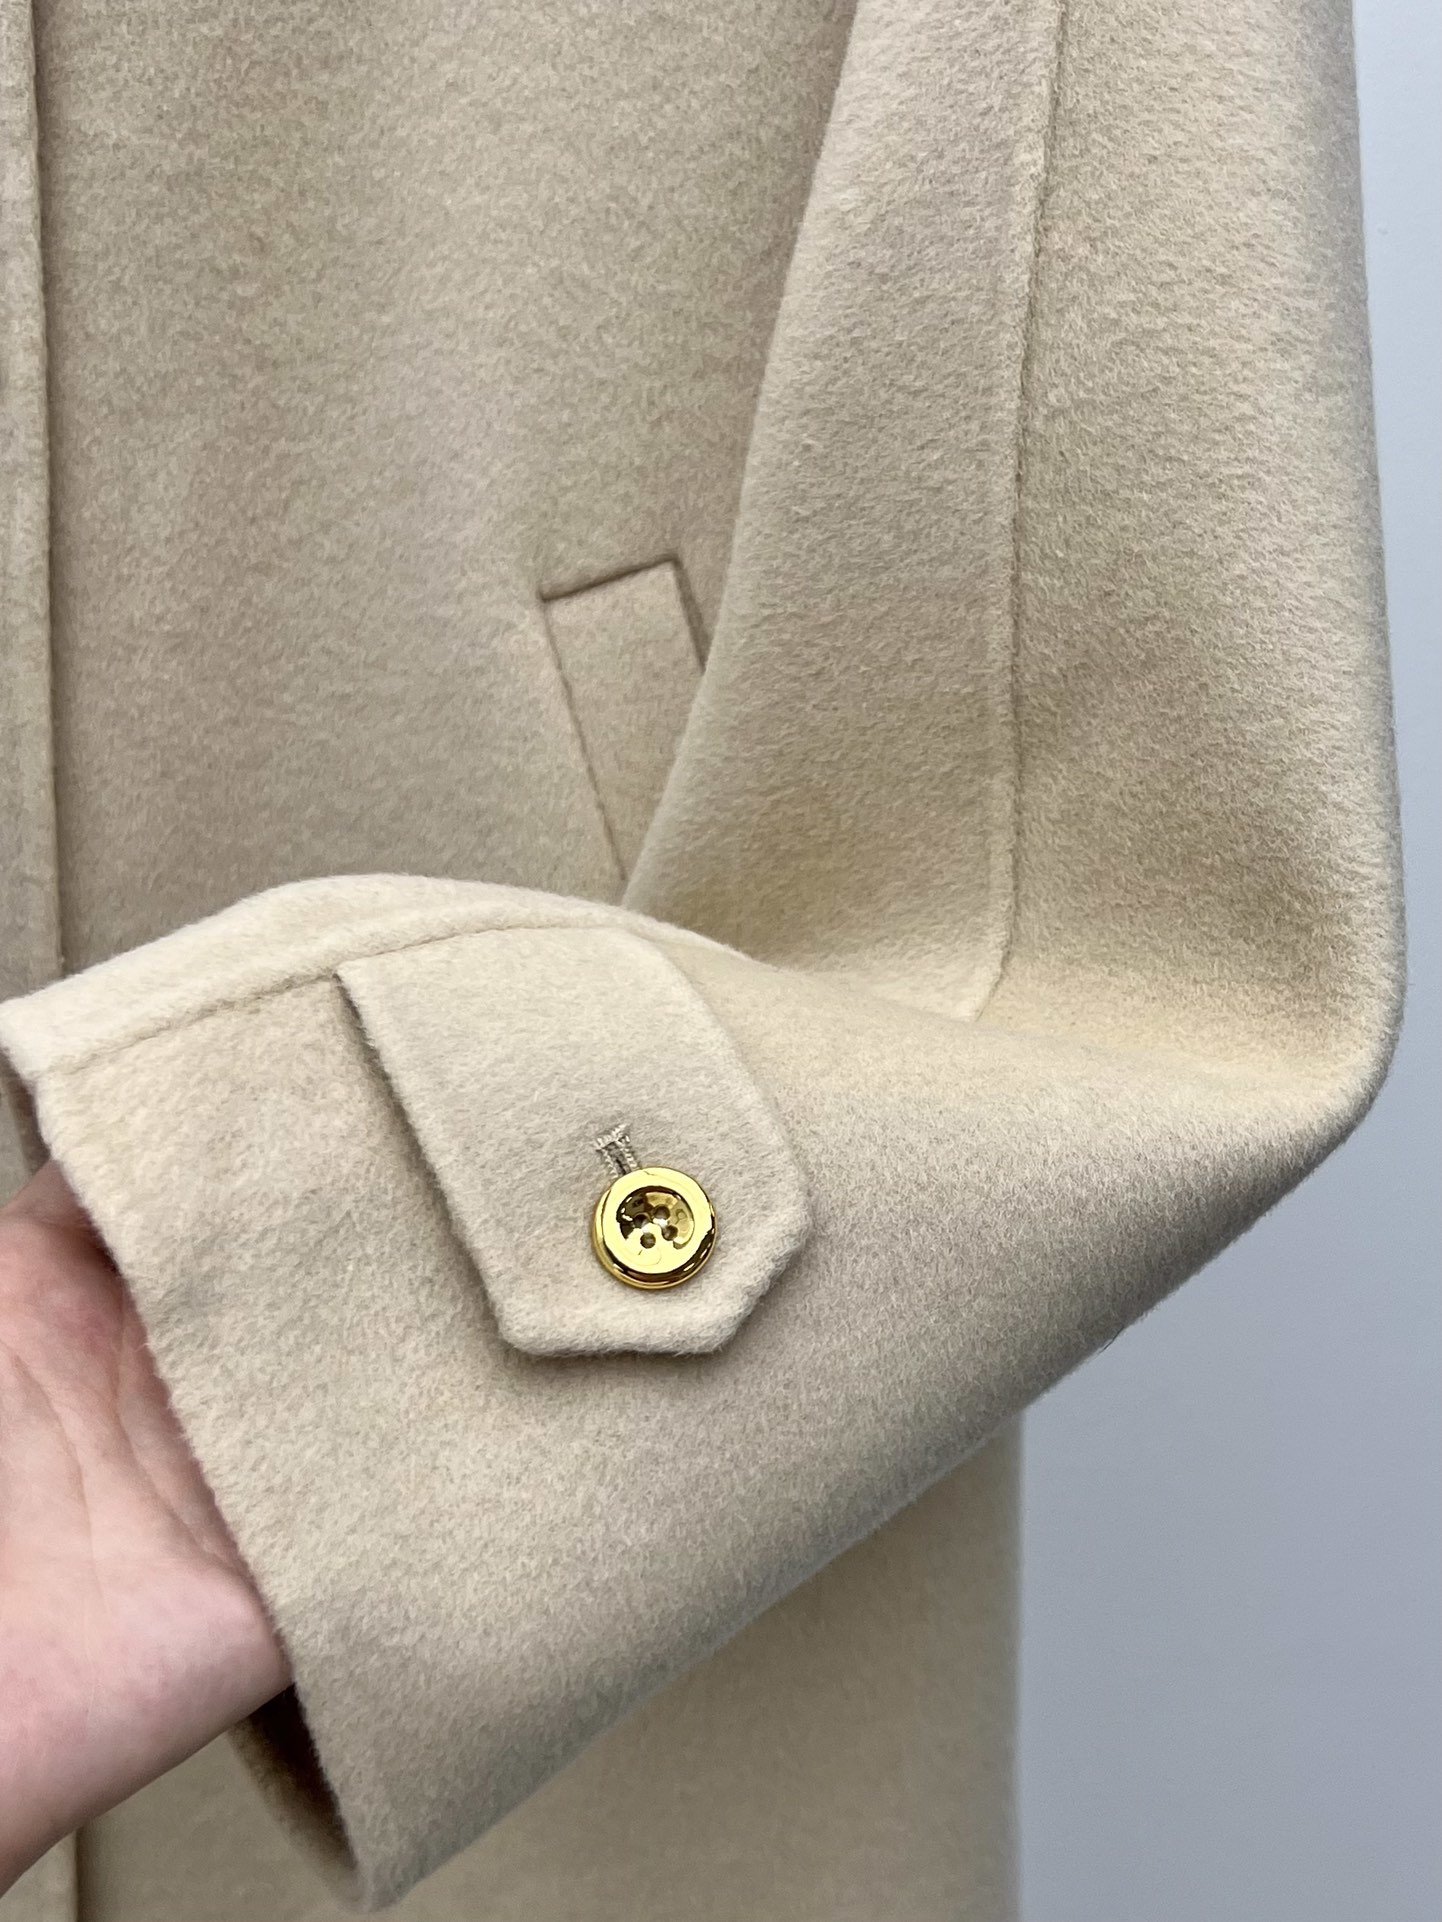 LoroPian*翻领羊绒大衣这款Ardis大衣采用100%山羊绒面料制成轻盈柔软的触感和宽大包裹的传统